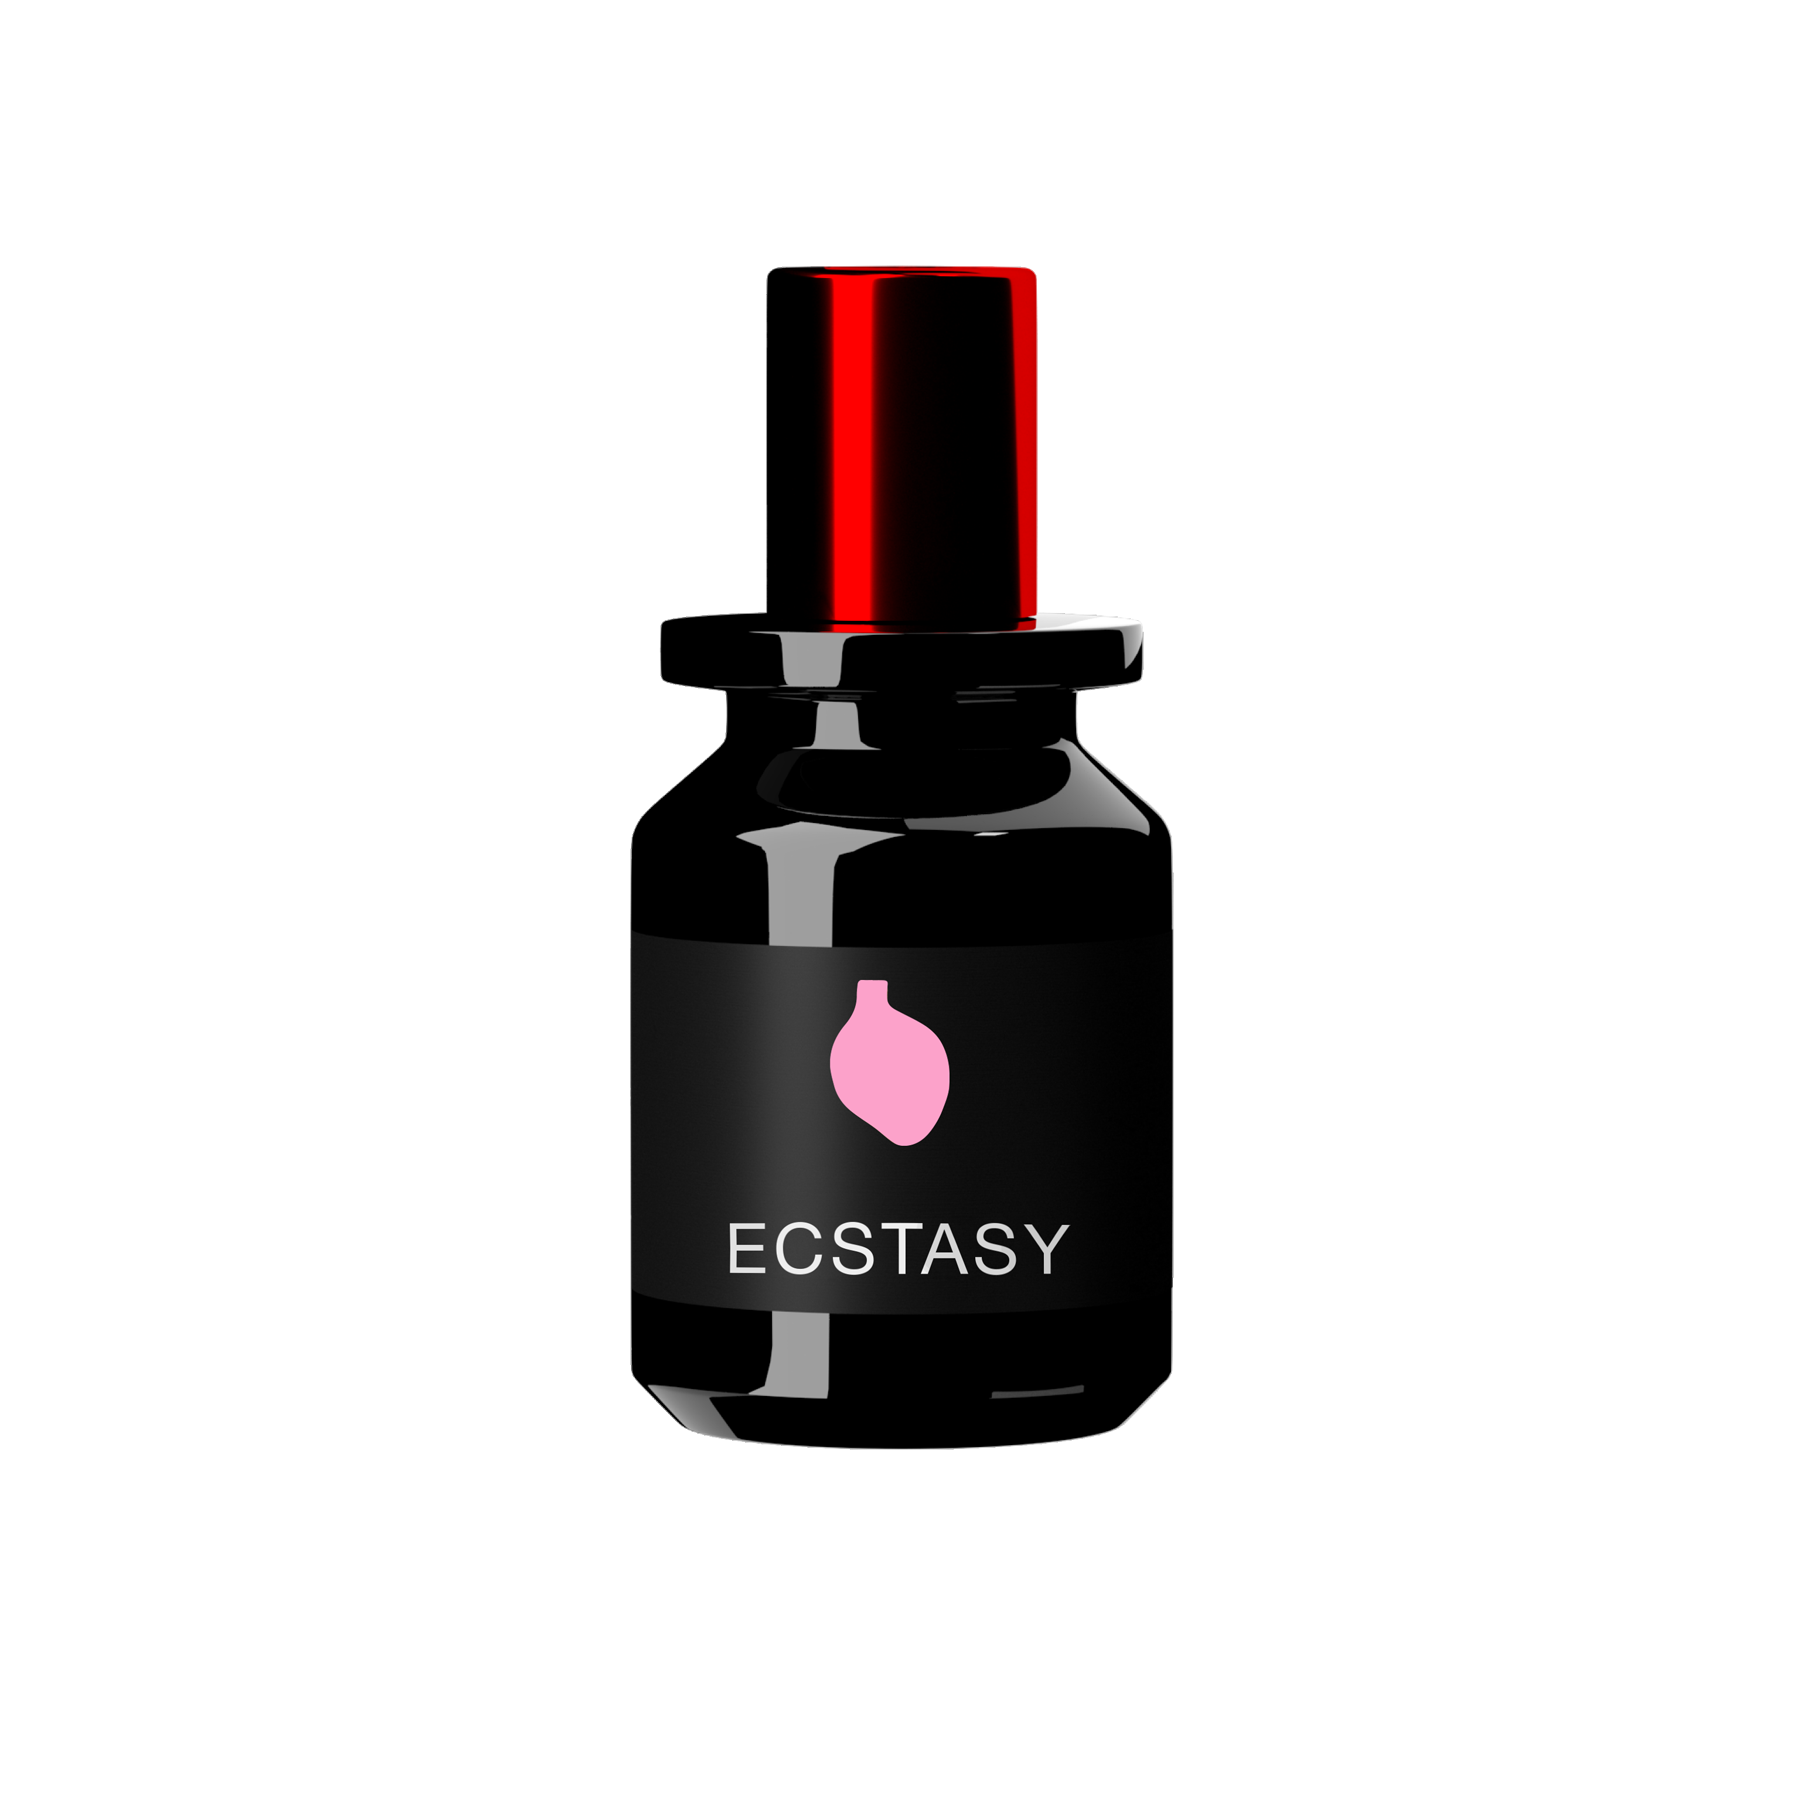 Map of the Heart Ecstasy V.6 30ml eau de parfum